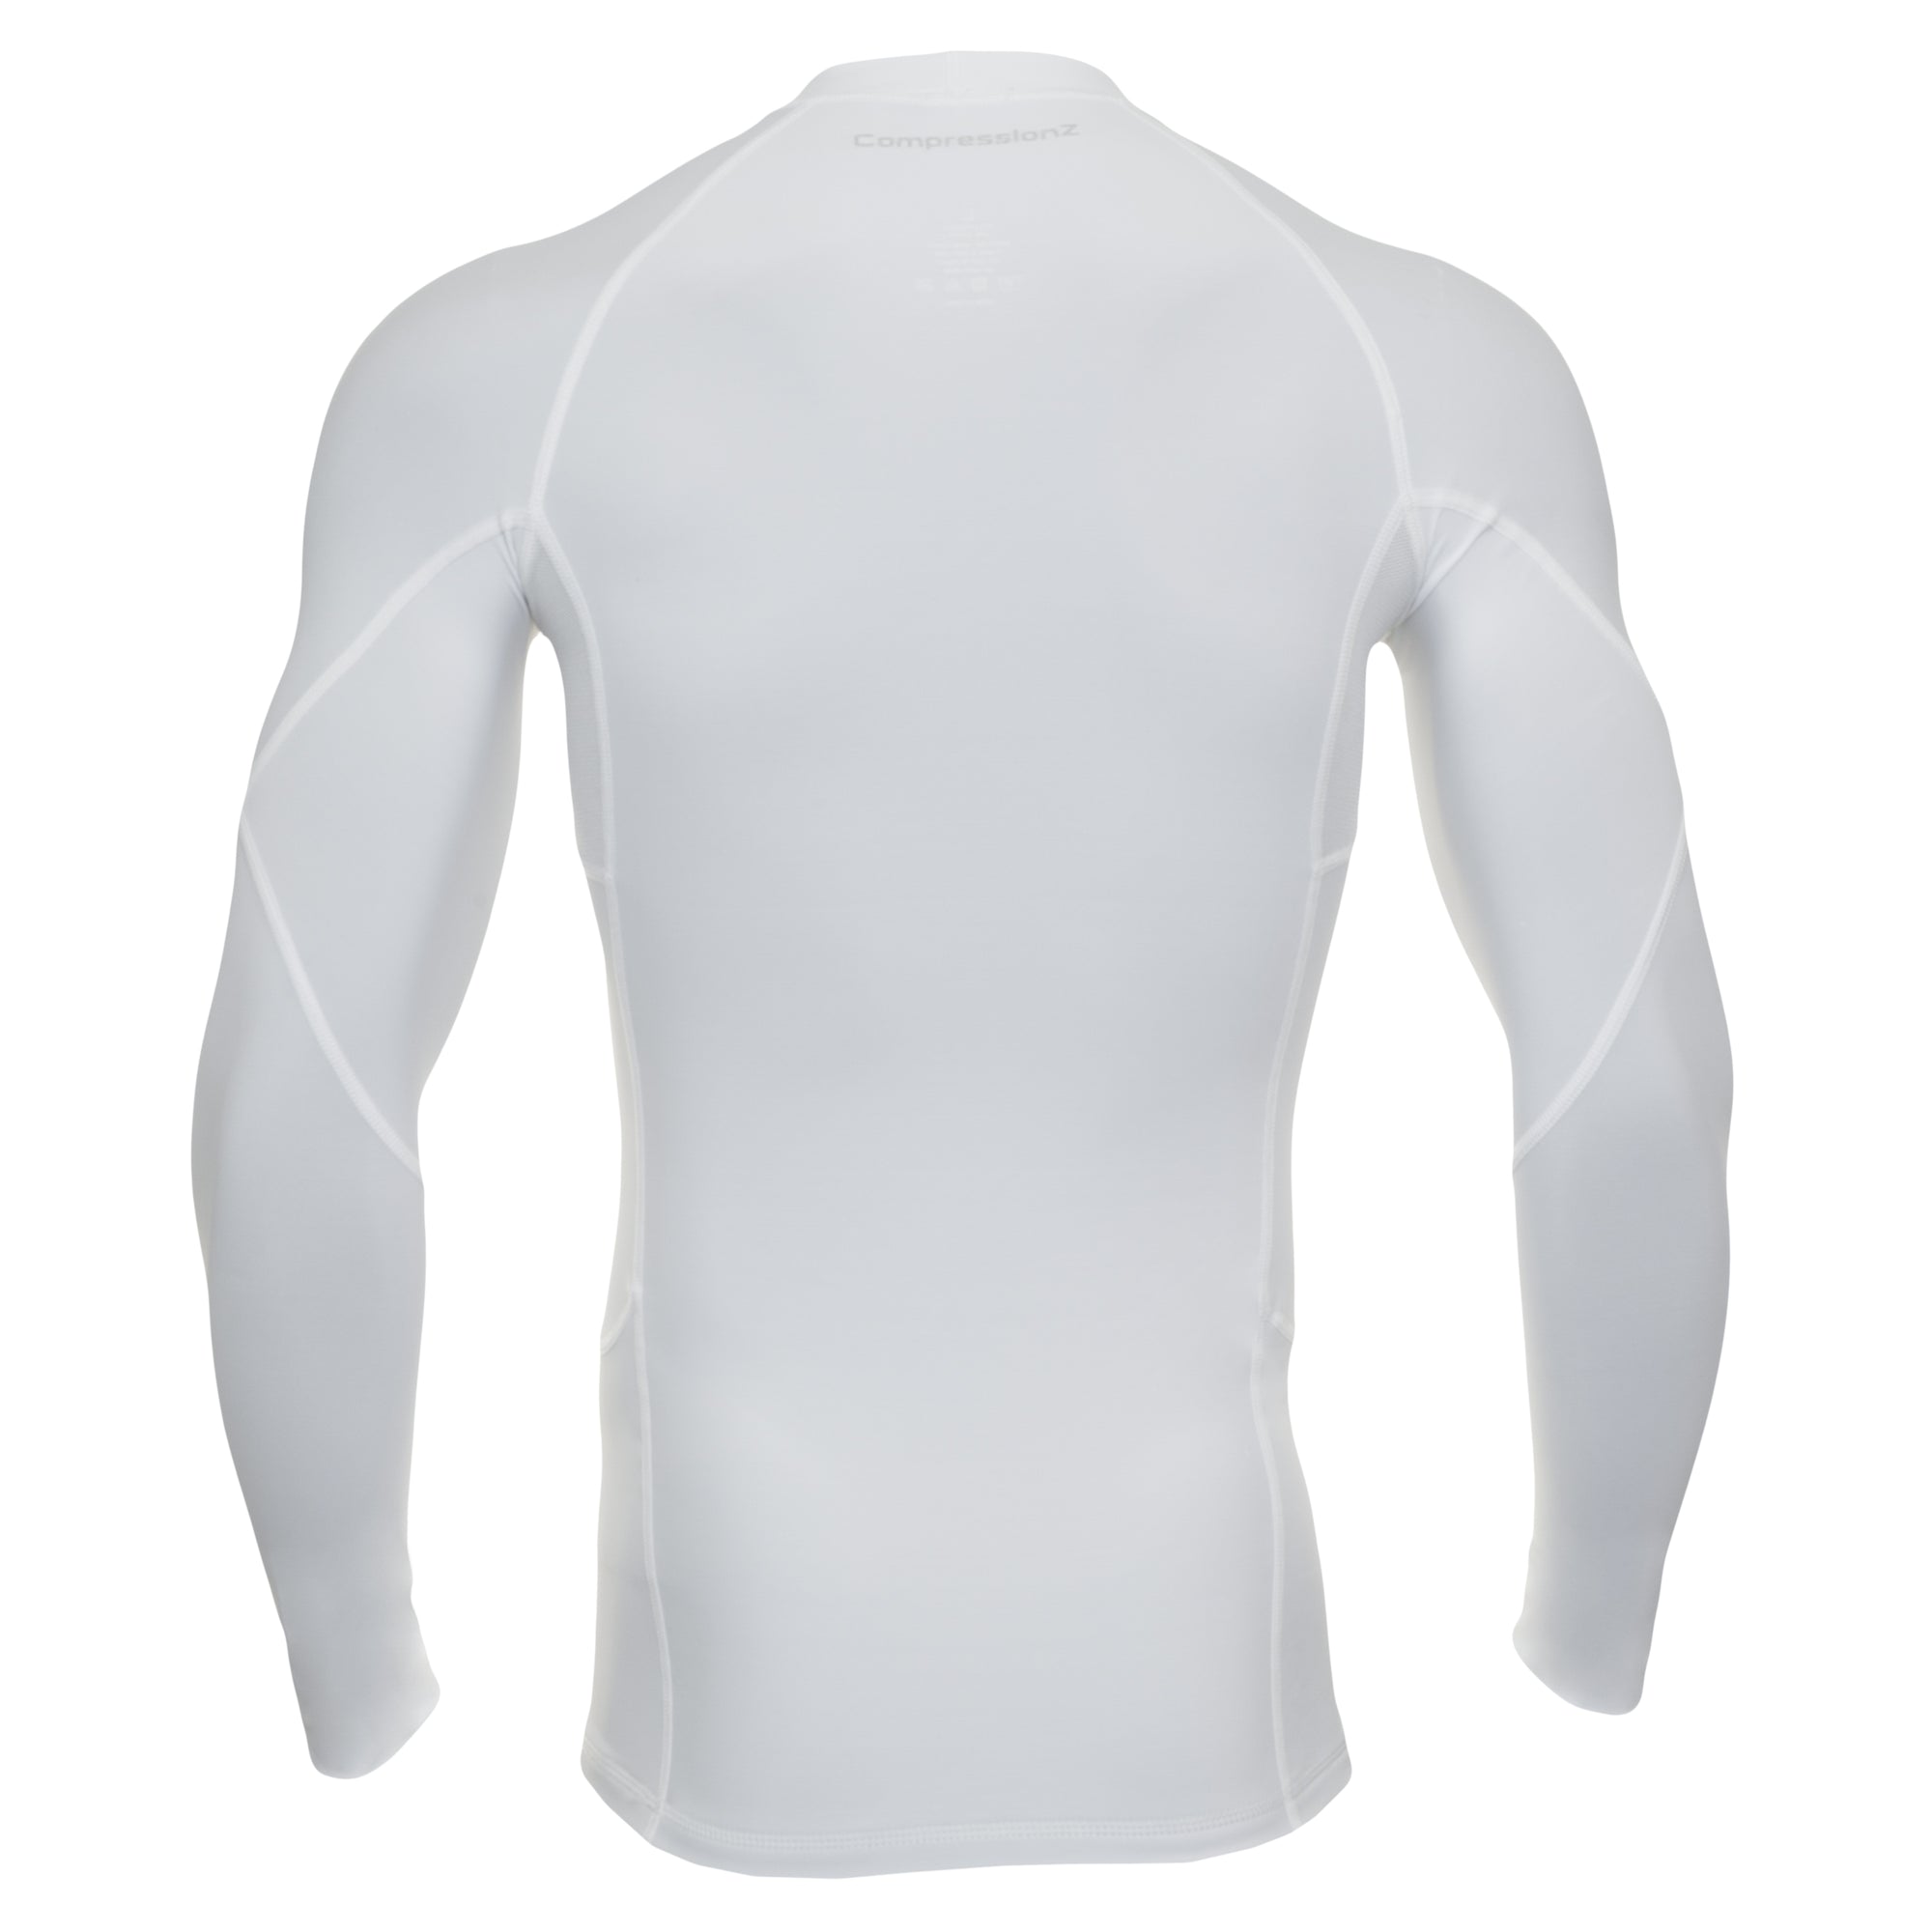 Men's Compression Long Sleeve Shirt - White